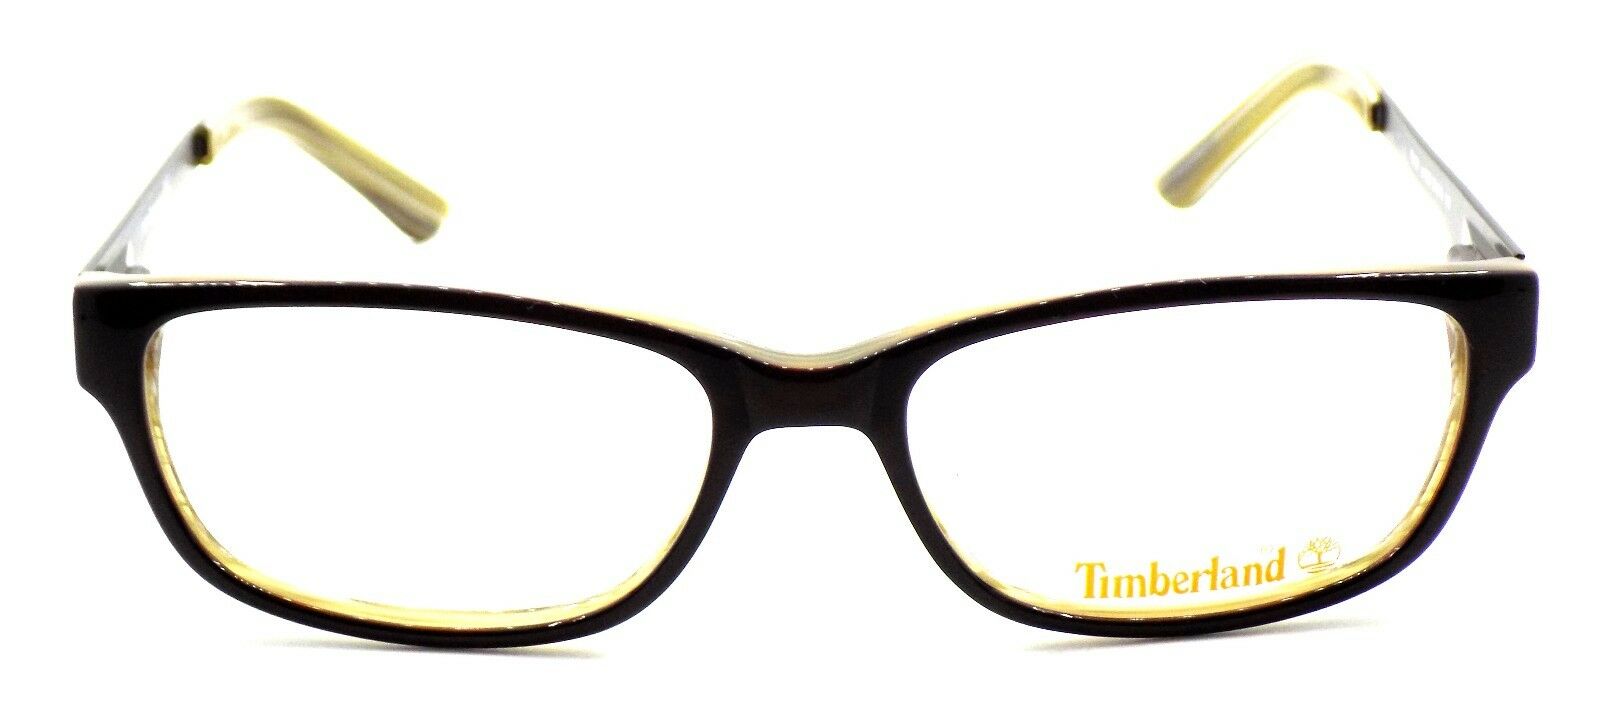 2-TIMBERLAND TB1221 050 Men's Eyeglasses Frames 53-16-140 Dark Brown + CASE-664689513239-IKSpecs